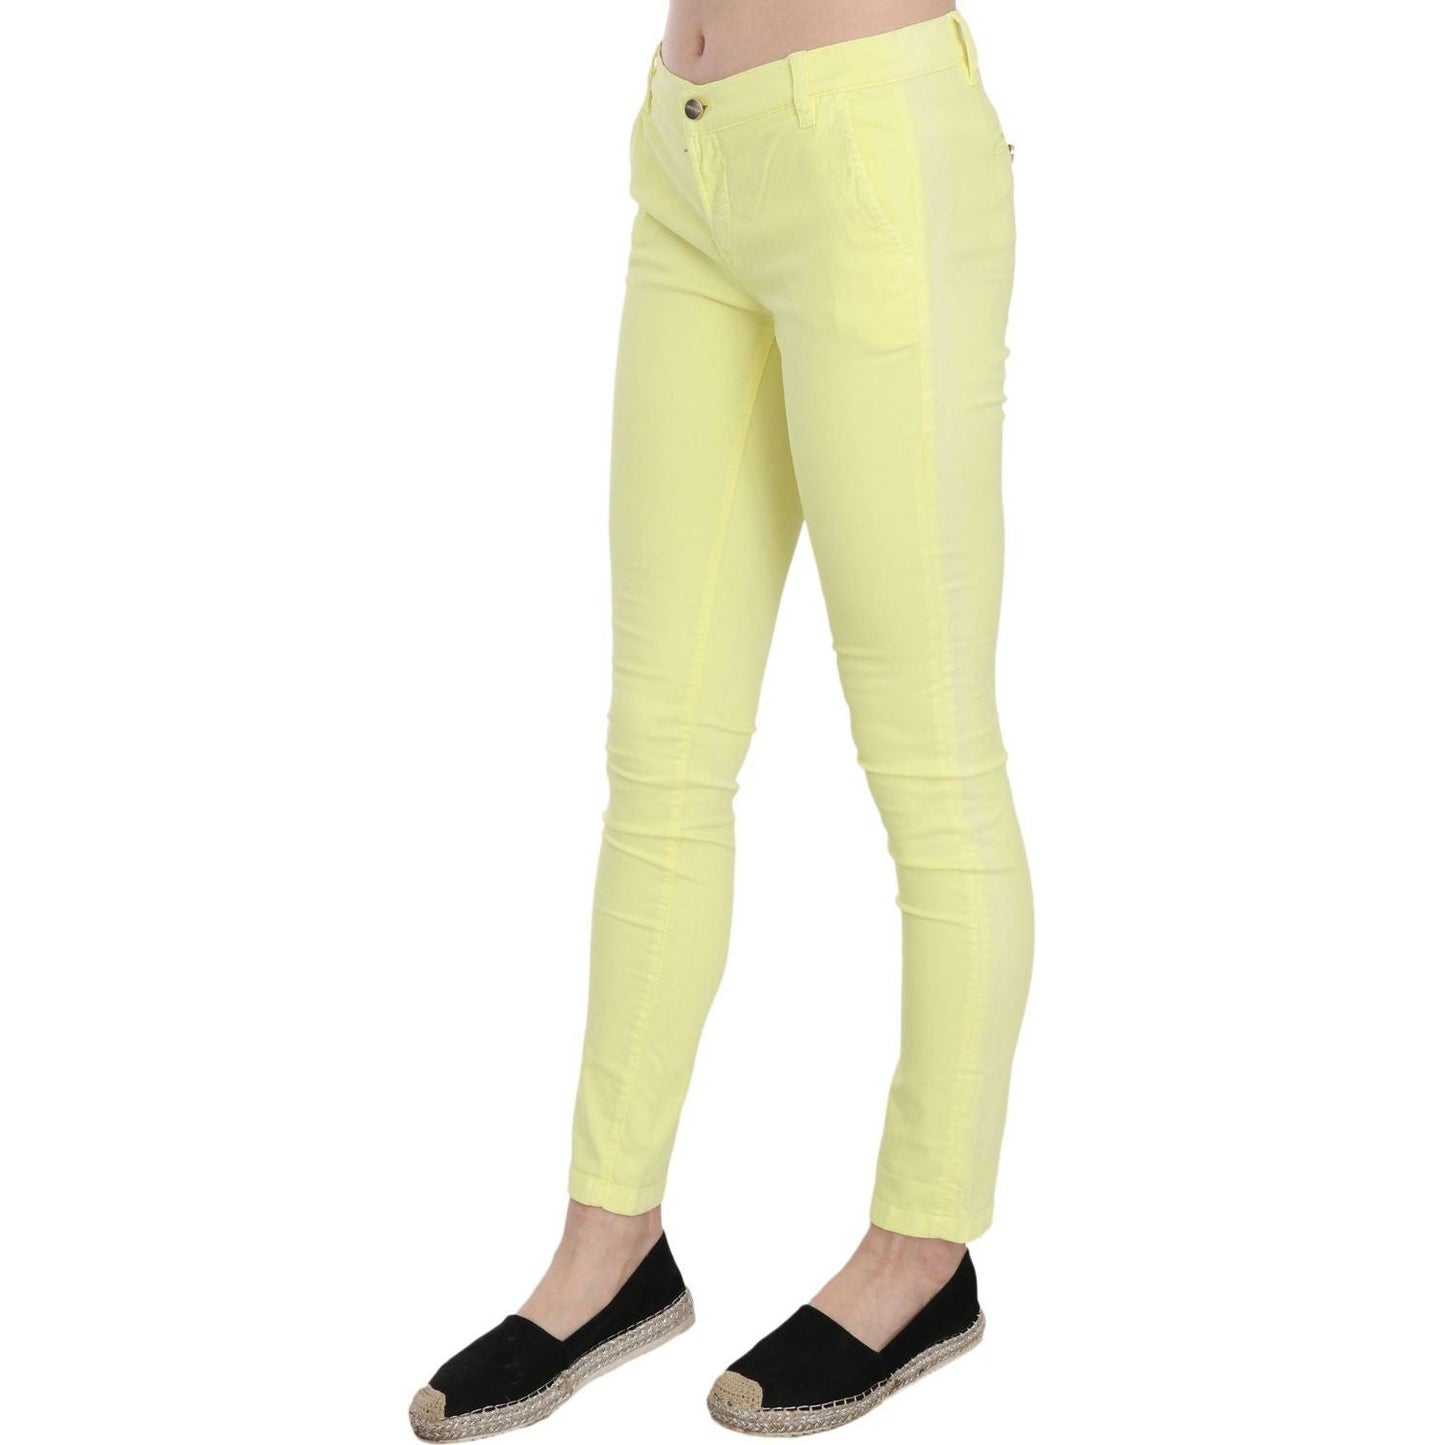 PINKO Chic Yellow Low Waist Skinny Casual Trousers yellow-cotton-stretch-low-waist-skinny-casual-trouser-pants IMG_0569-scaled.jpg